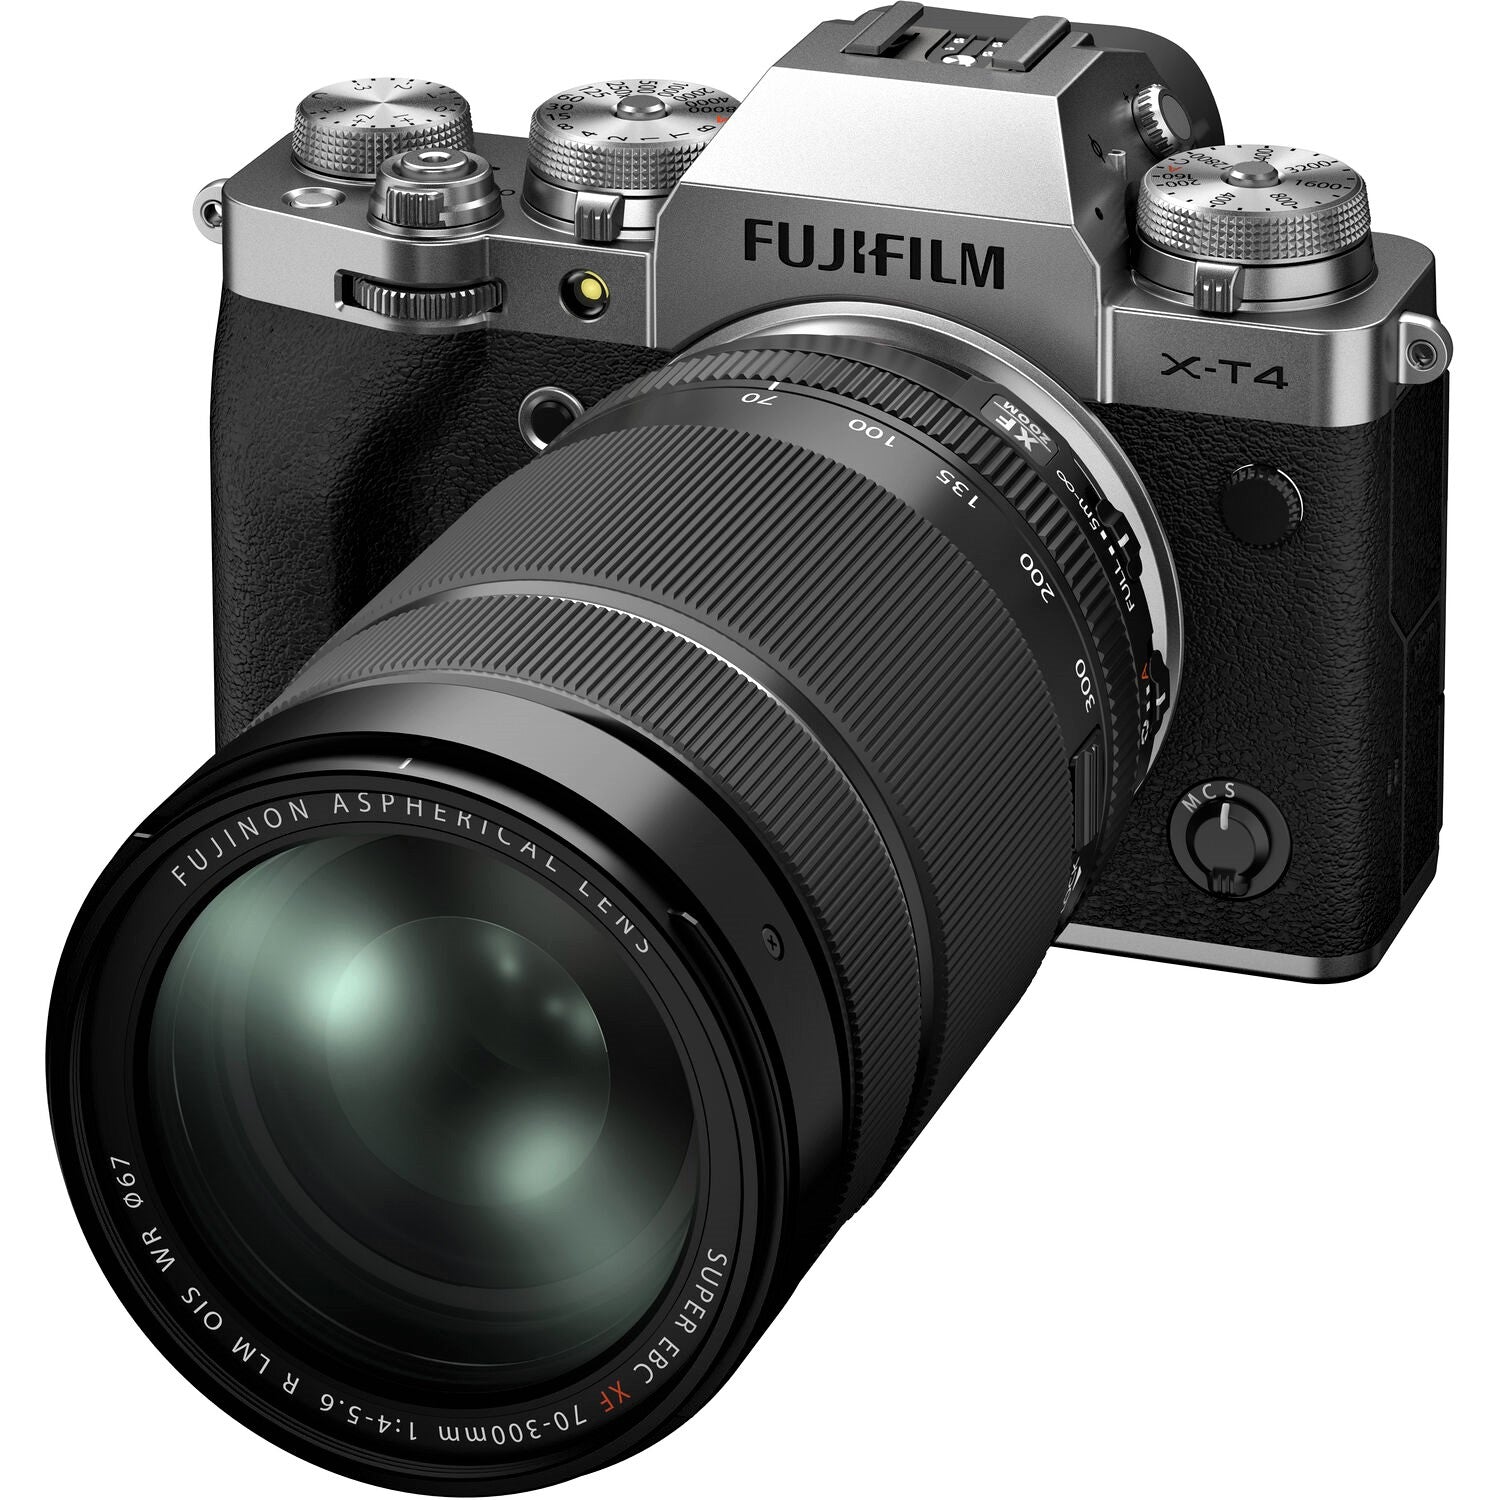 Fujifilm XF 70-300mm f4-5.6 R LM OIS WR lens field review